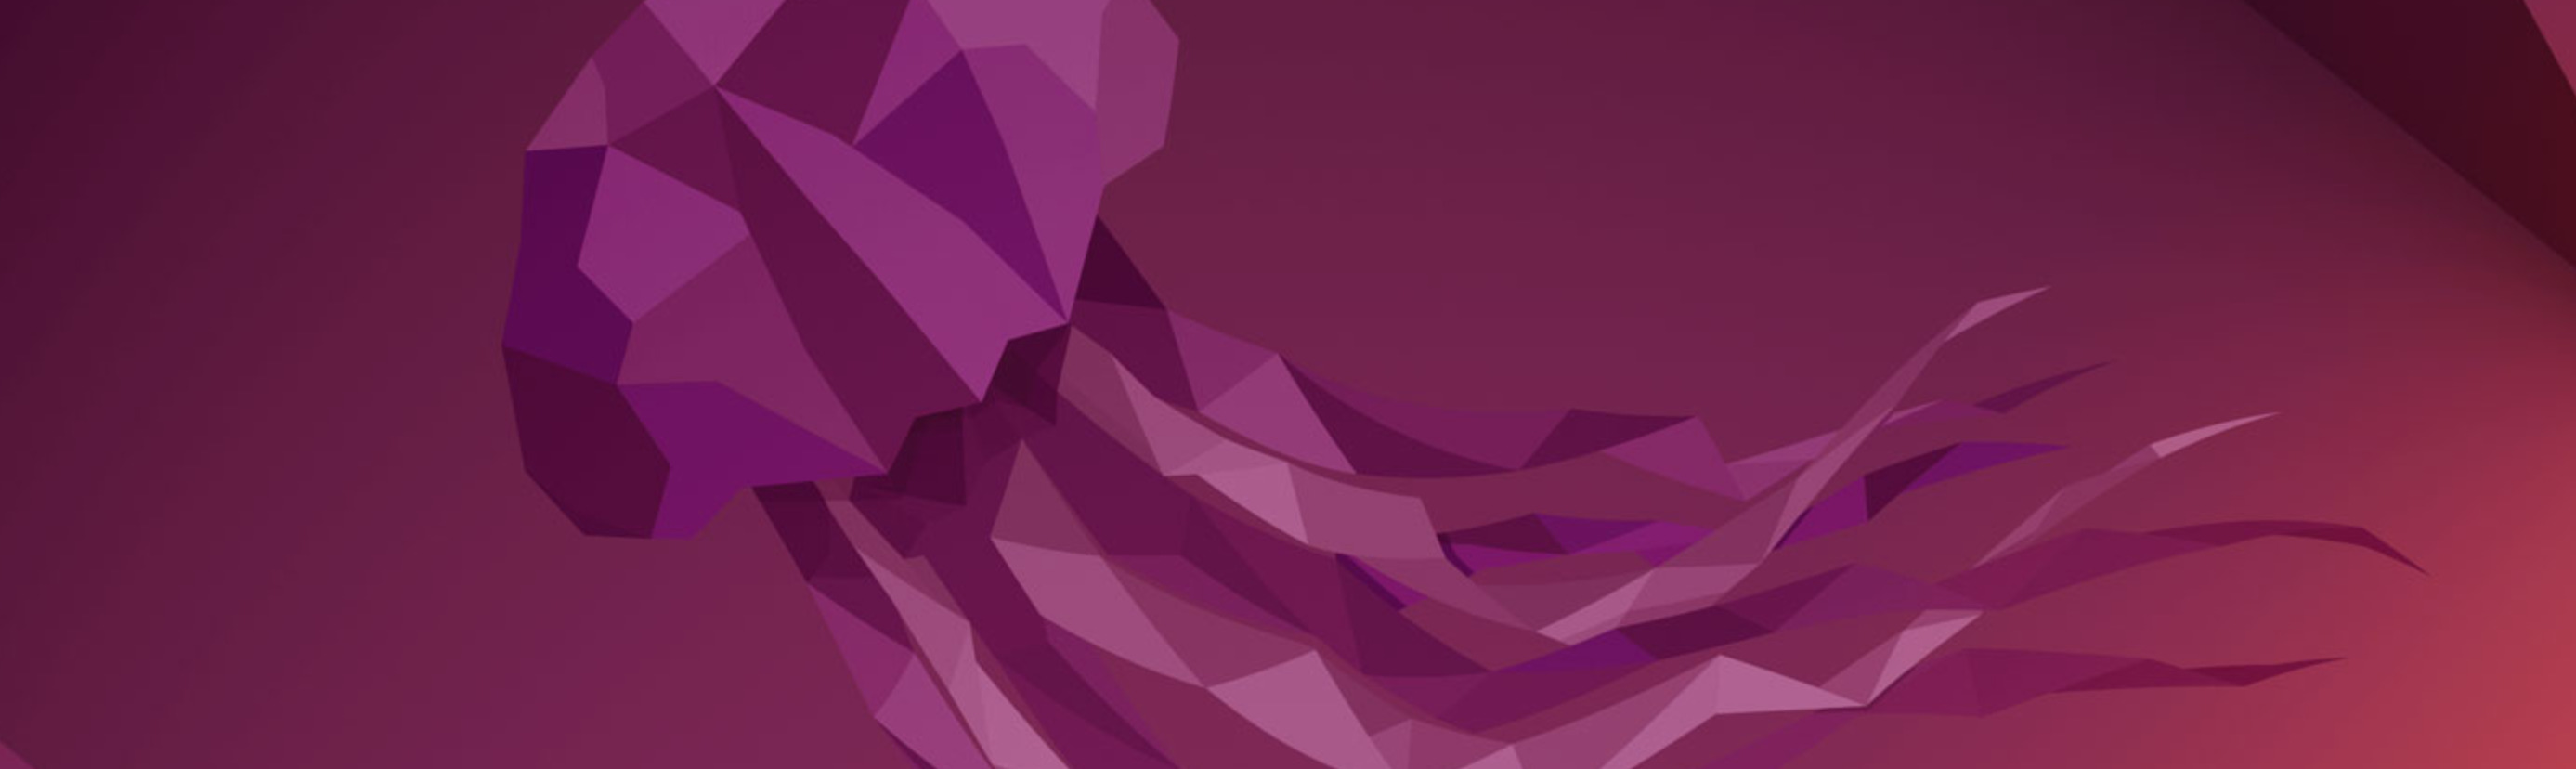 Ubuntu desktop image for 22.04